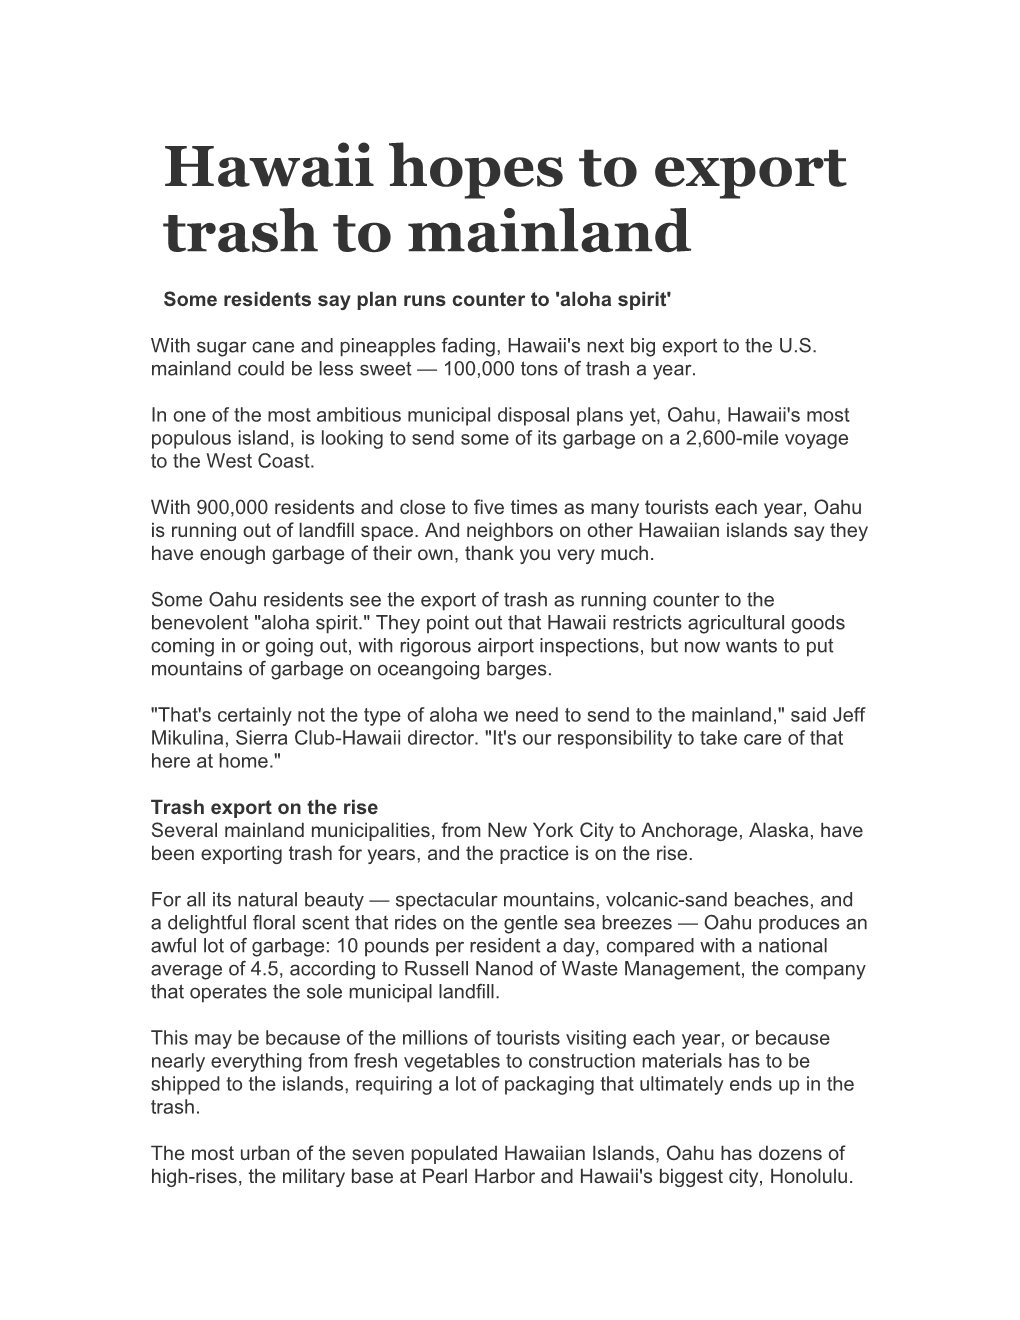 Hawaii Hopes to Export Trash to Mainland